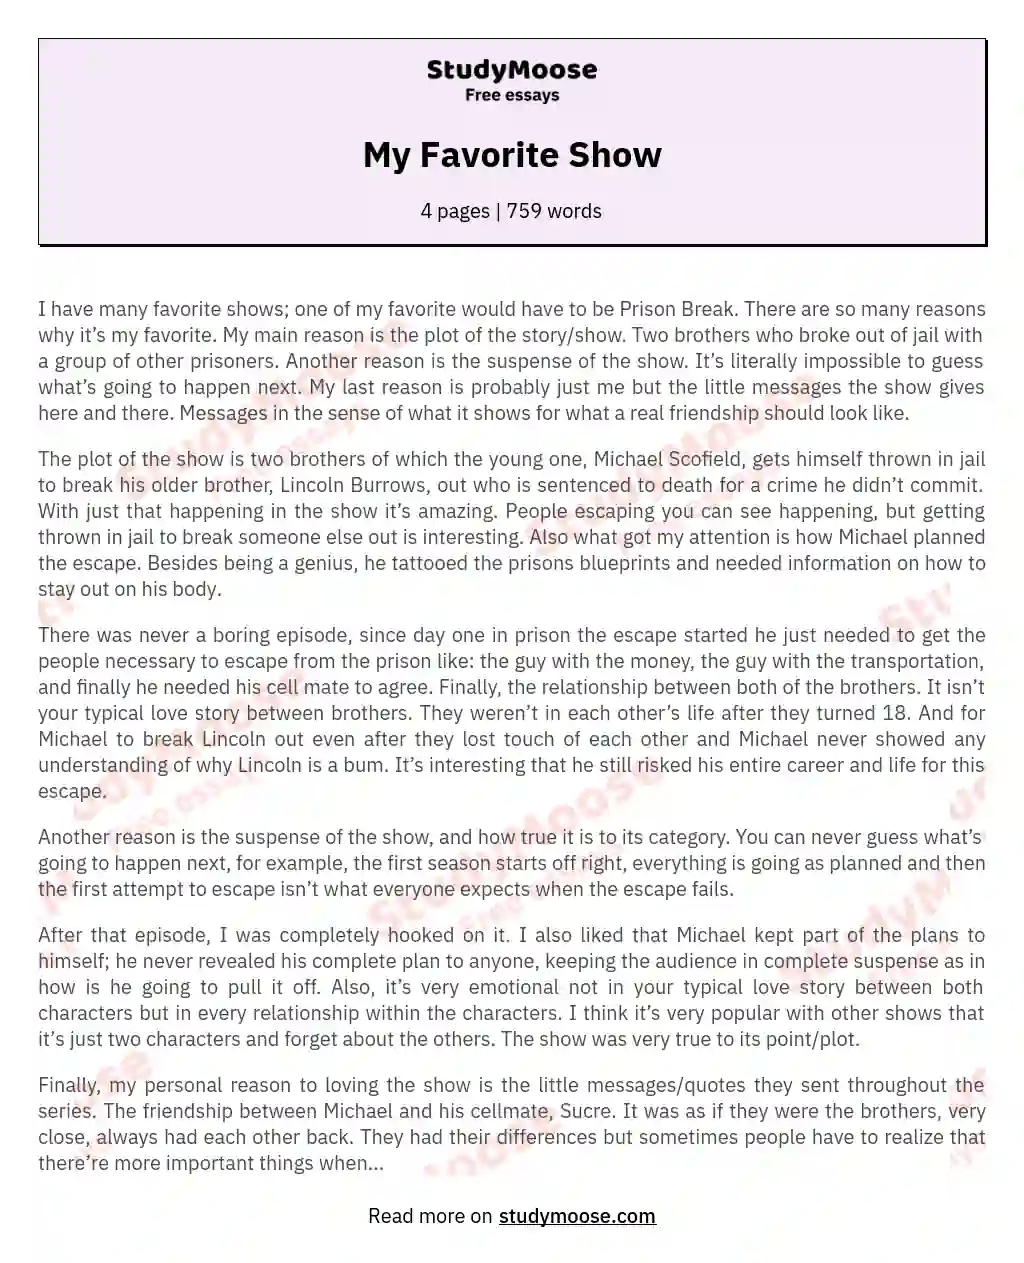 My Favorite Show essay